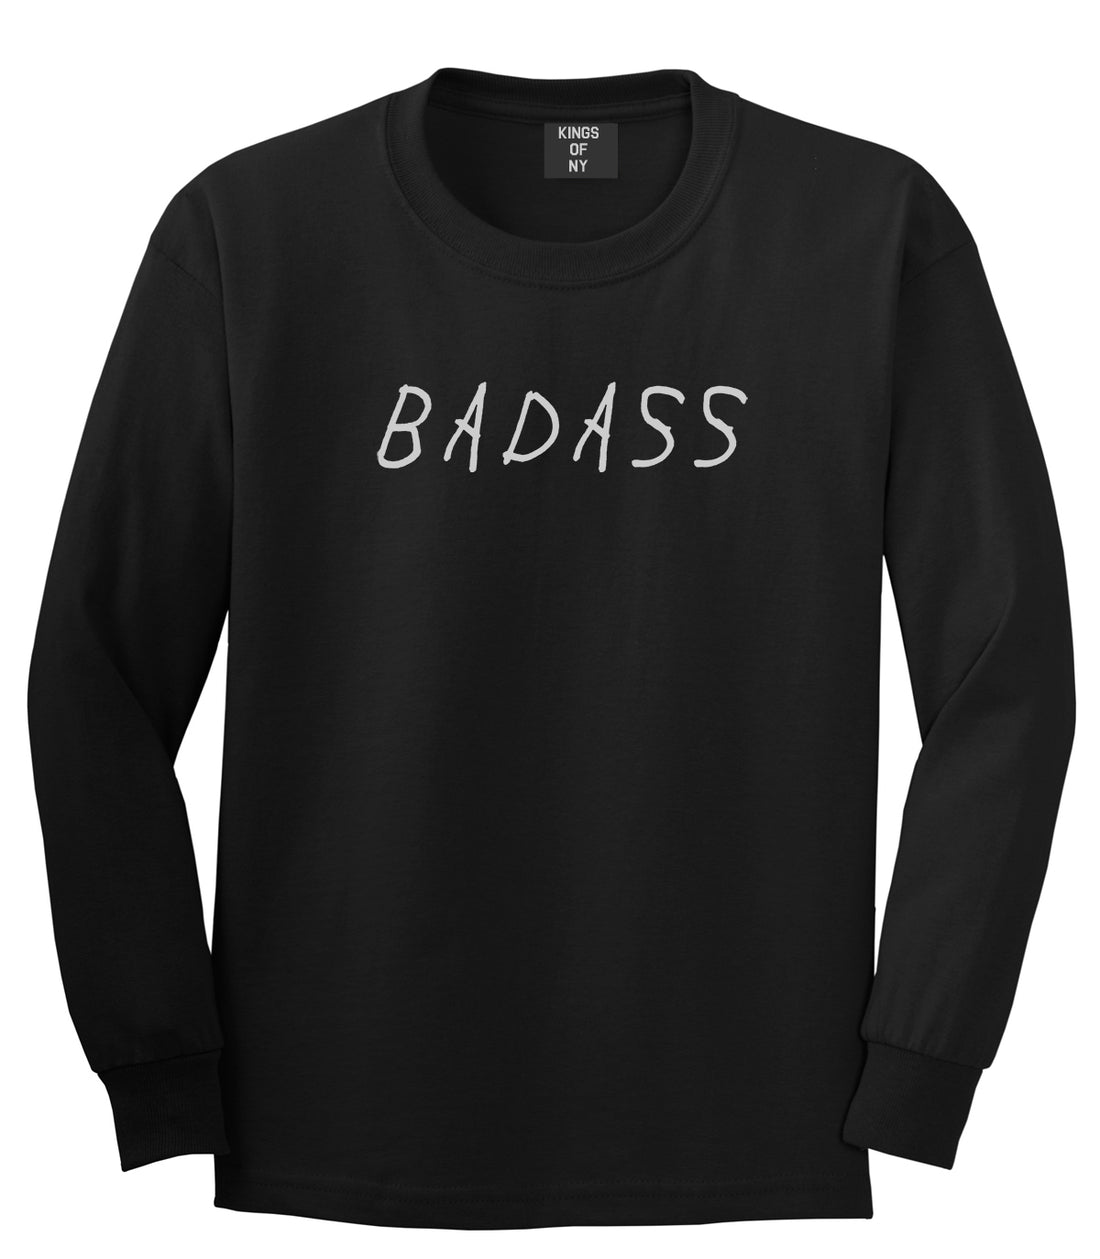 Badass Black Long Sleeve T-Shirt by Kings Of NY